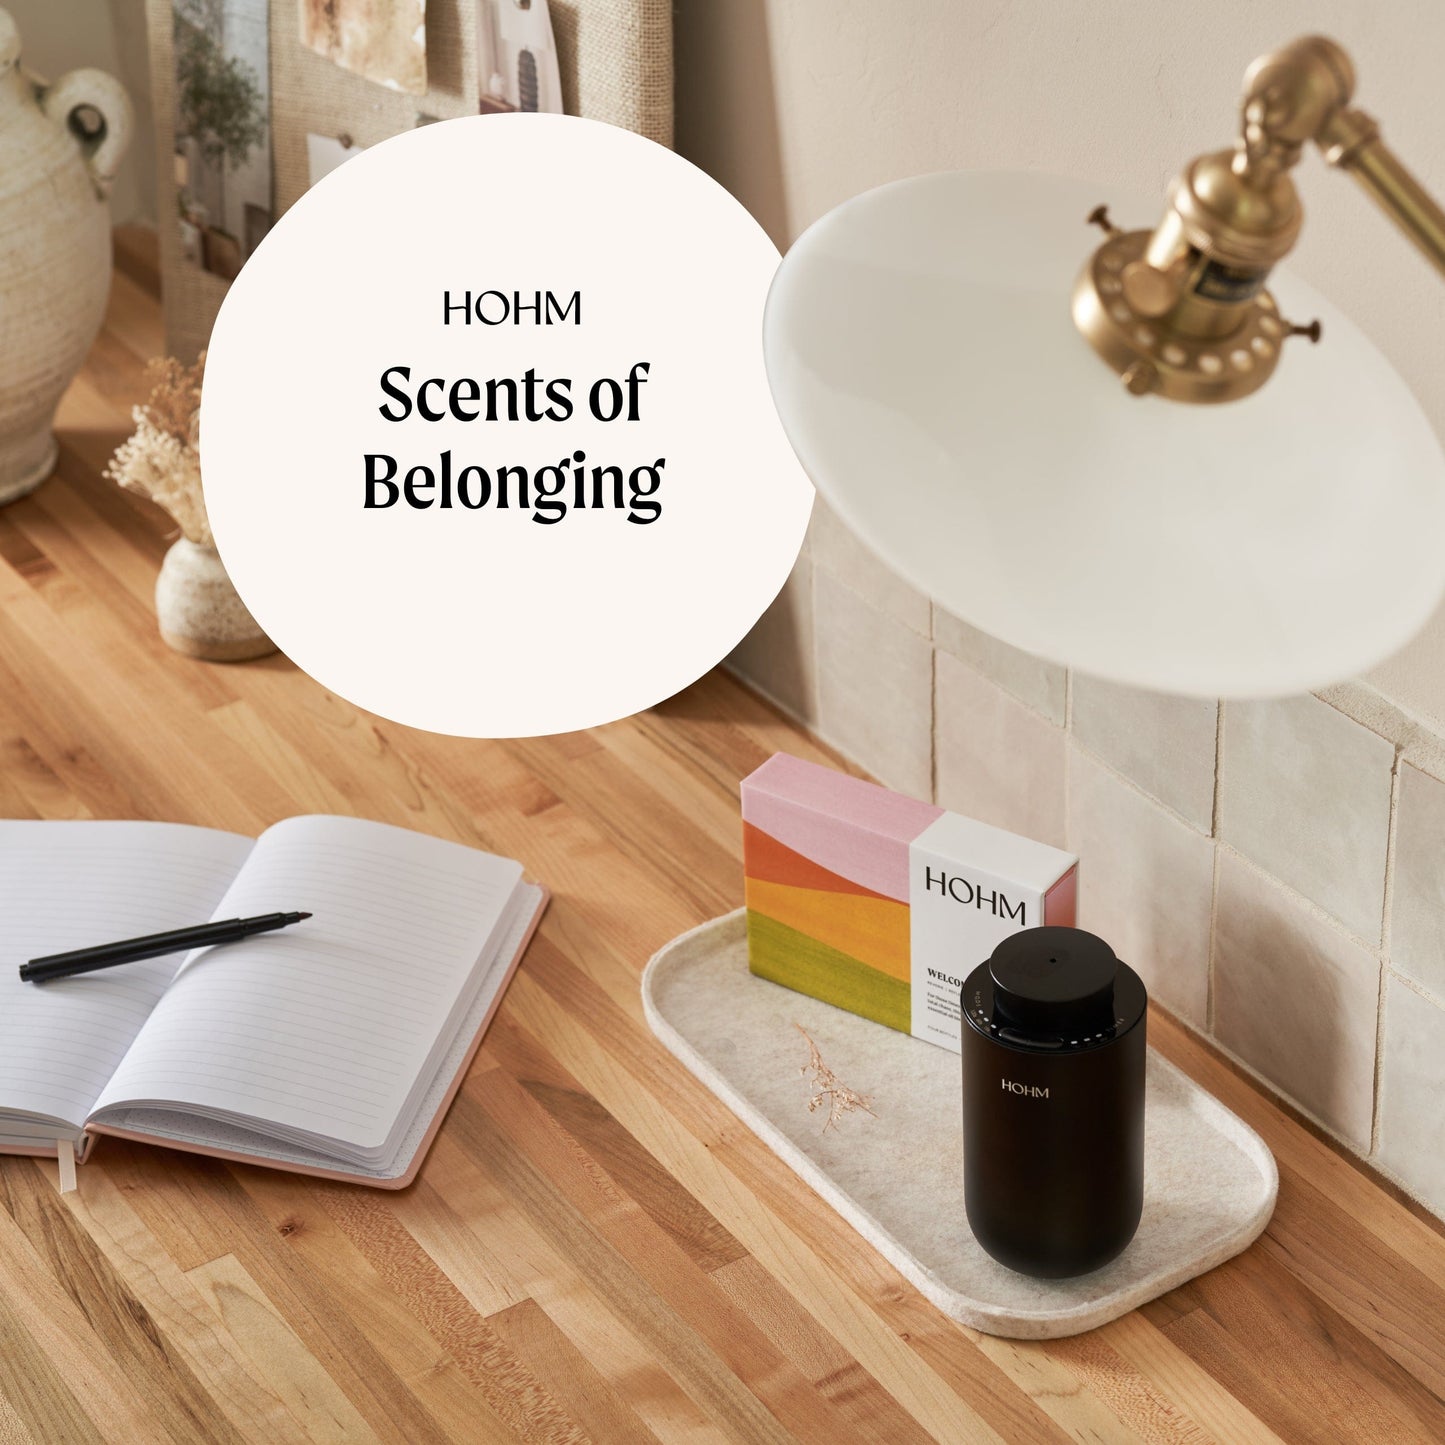 hohm scents of belonging